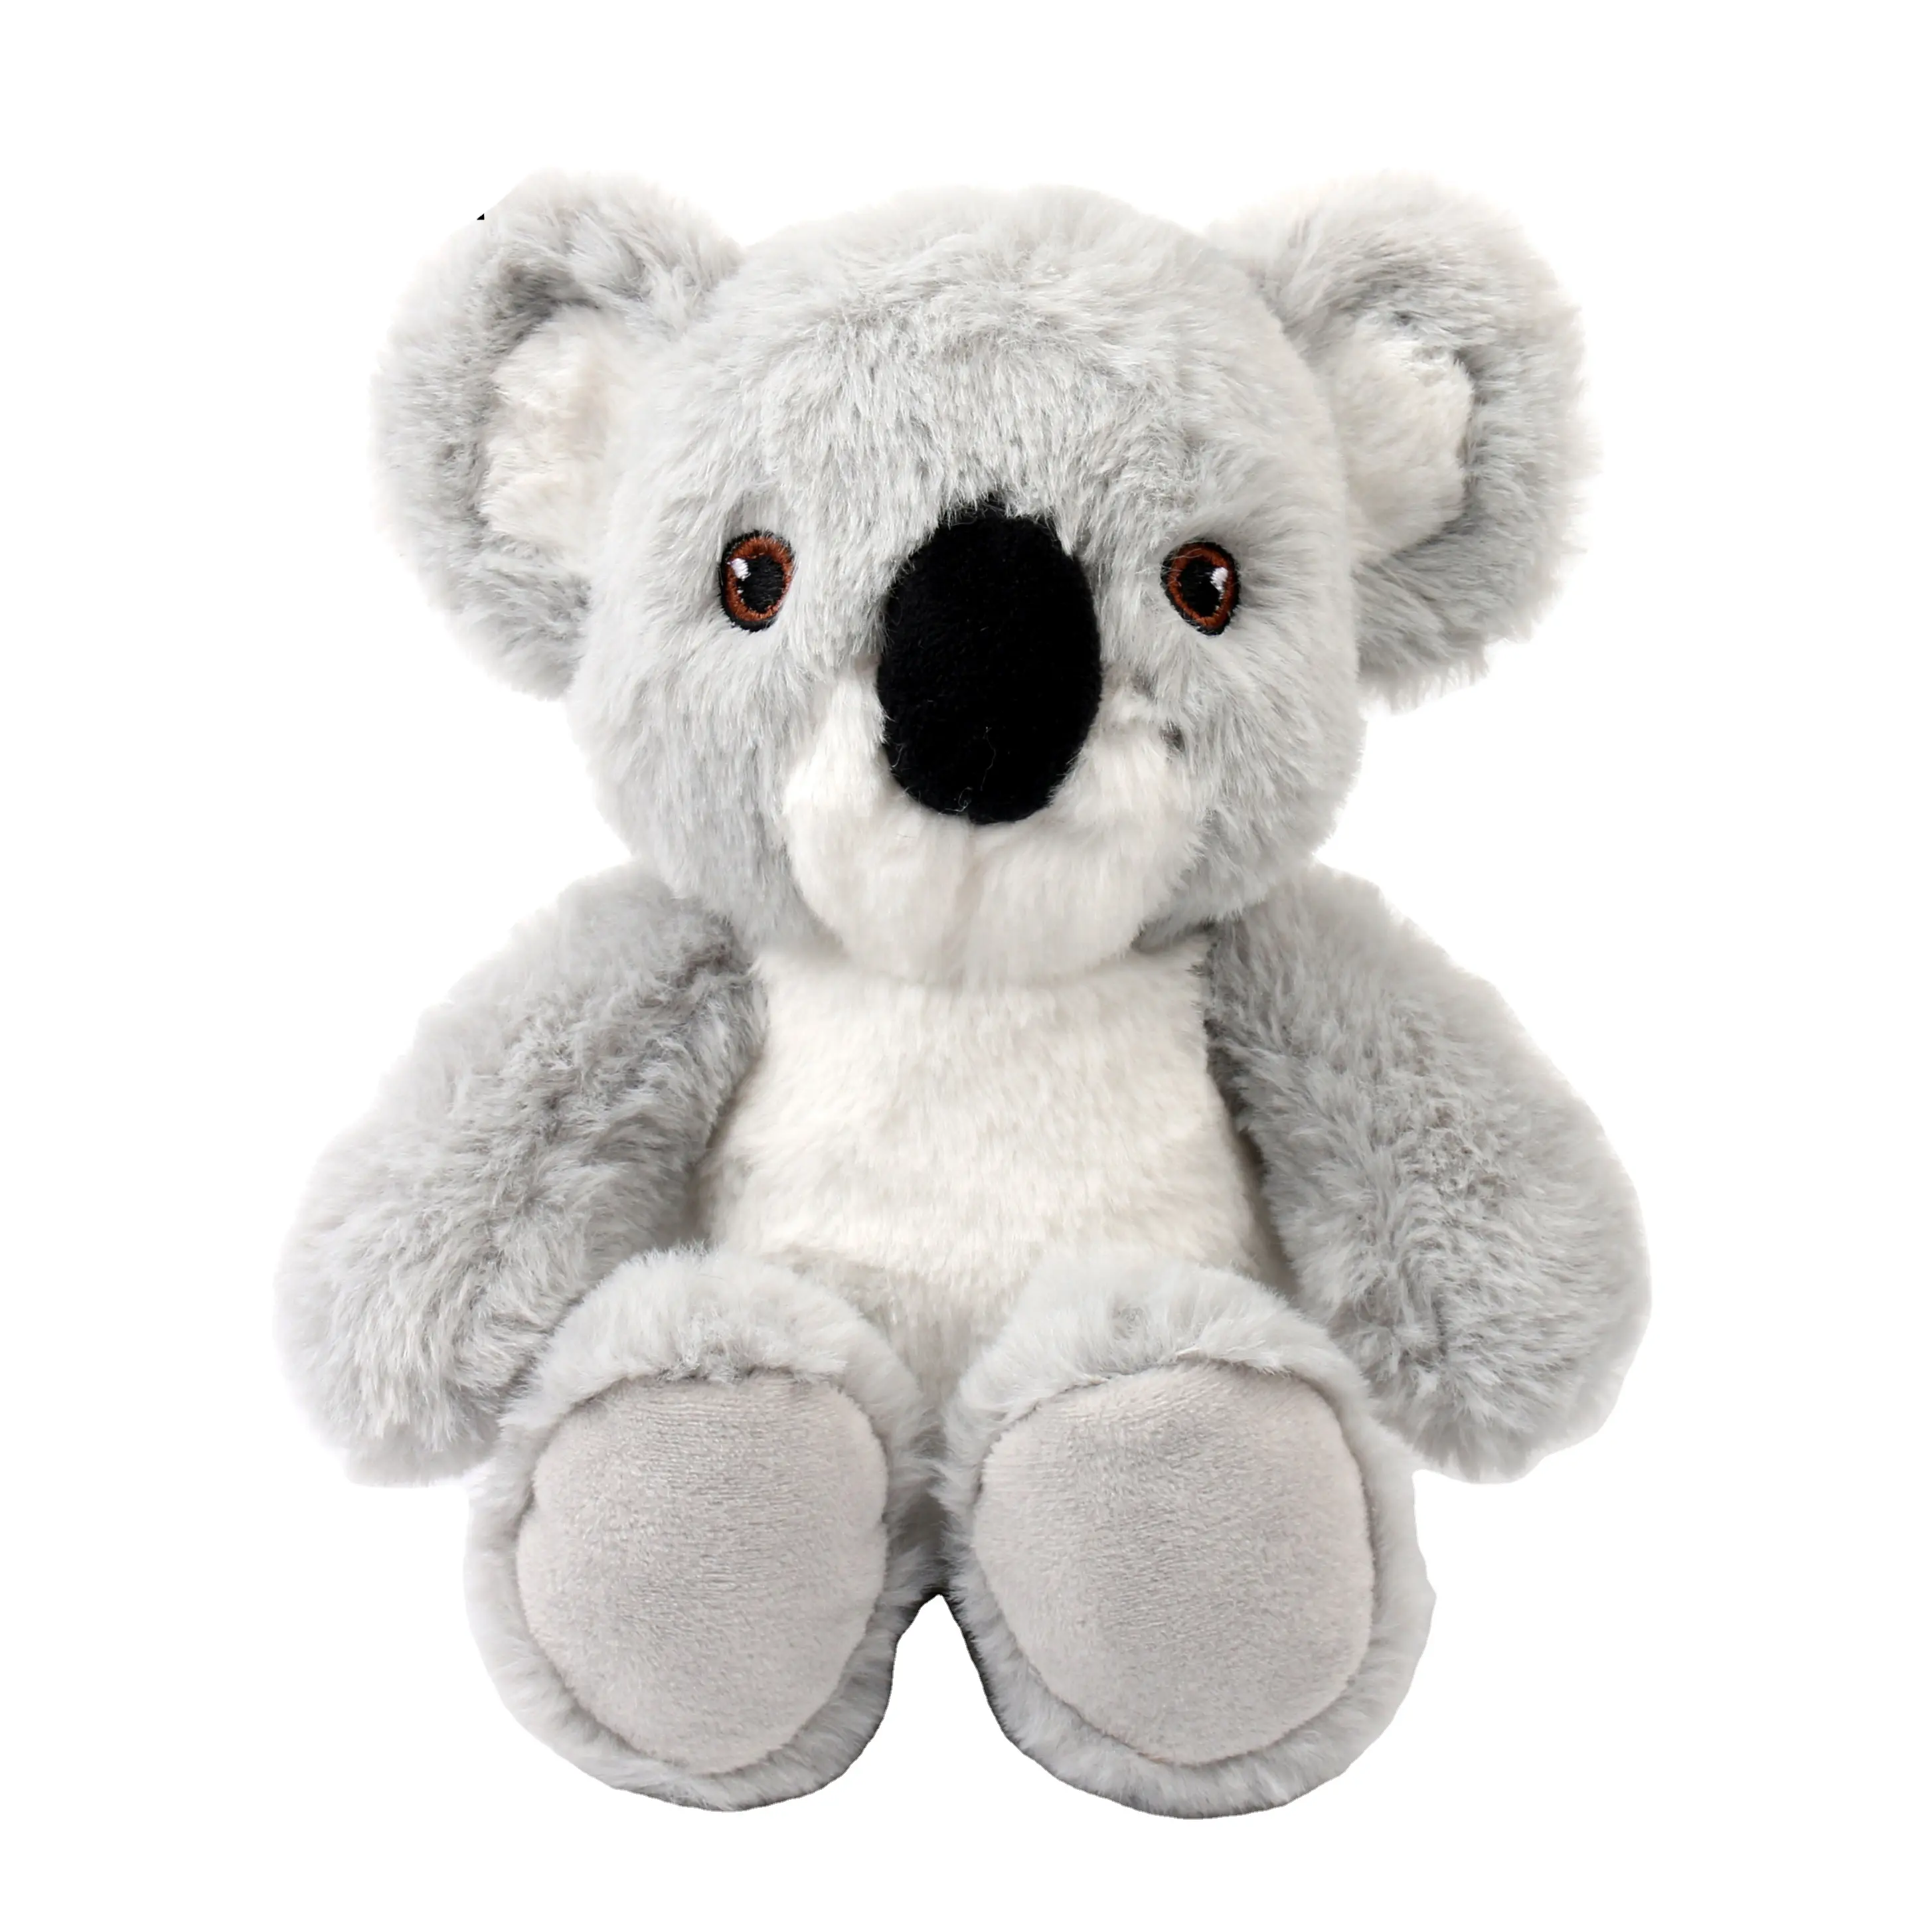 Koala de peluche de poliéster, koala de juguete de peluche, hecho de poliéster reciclado, venta al por mayor